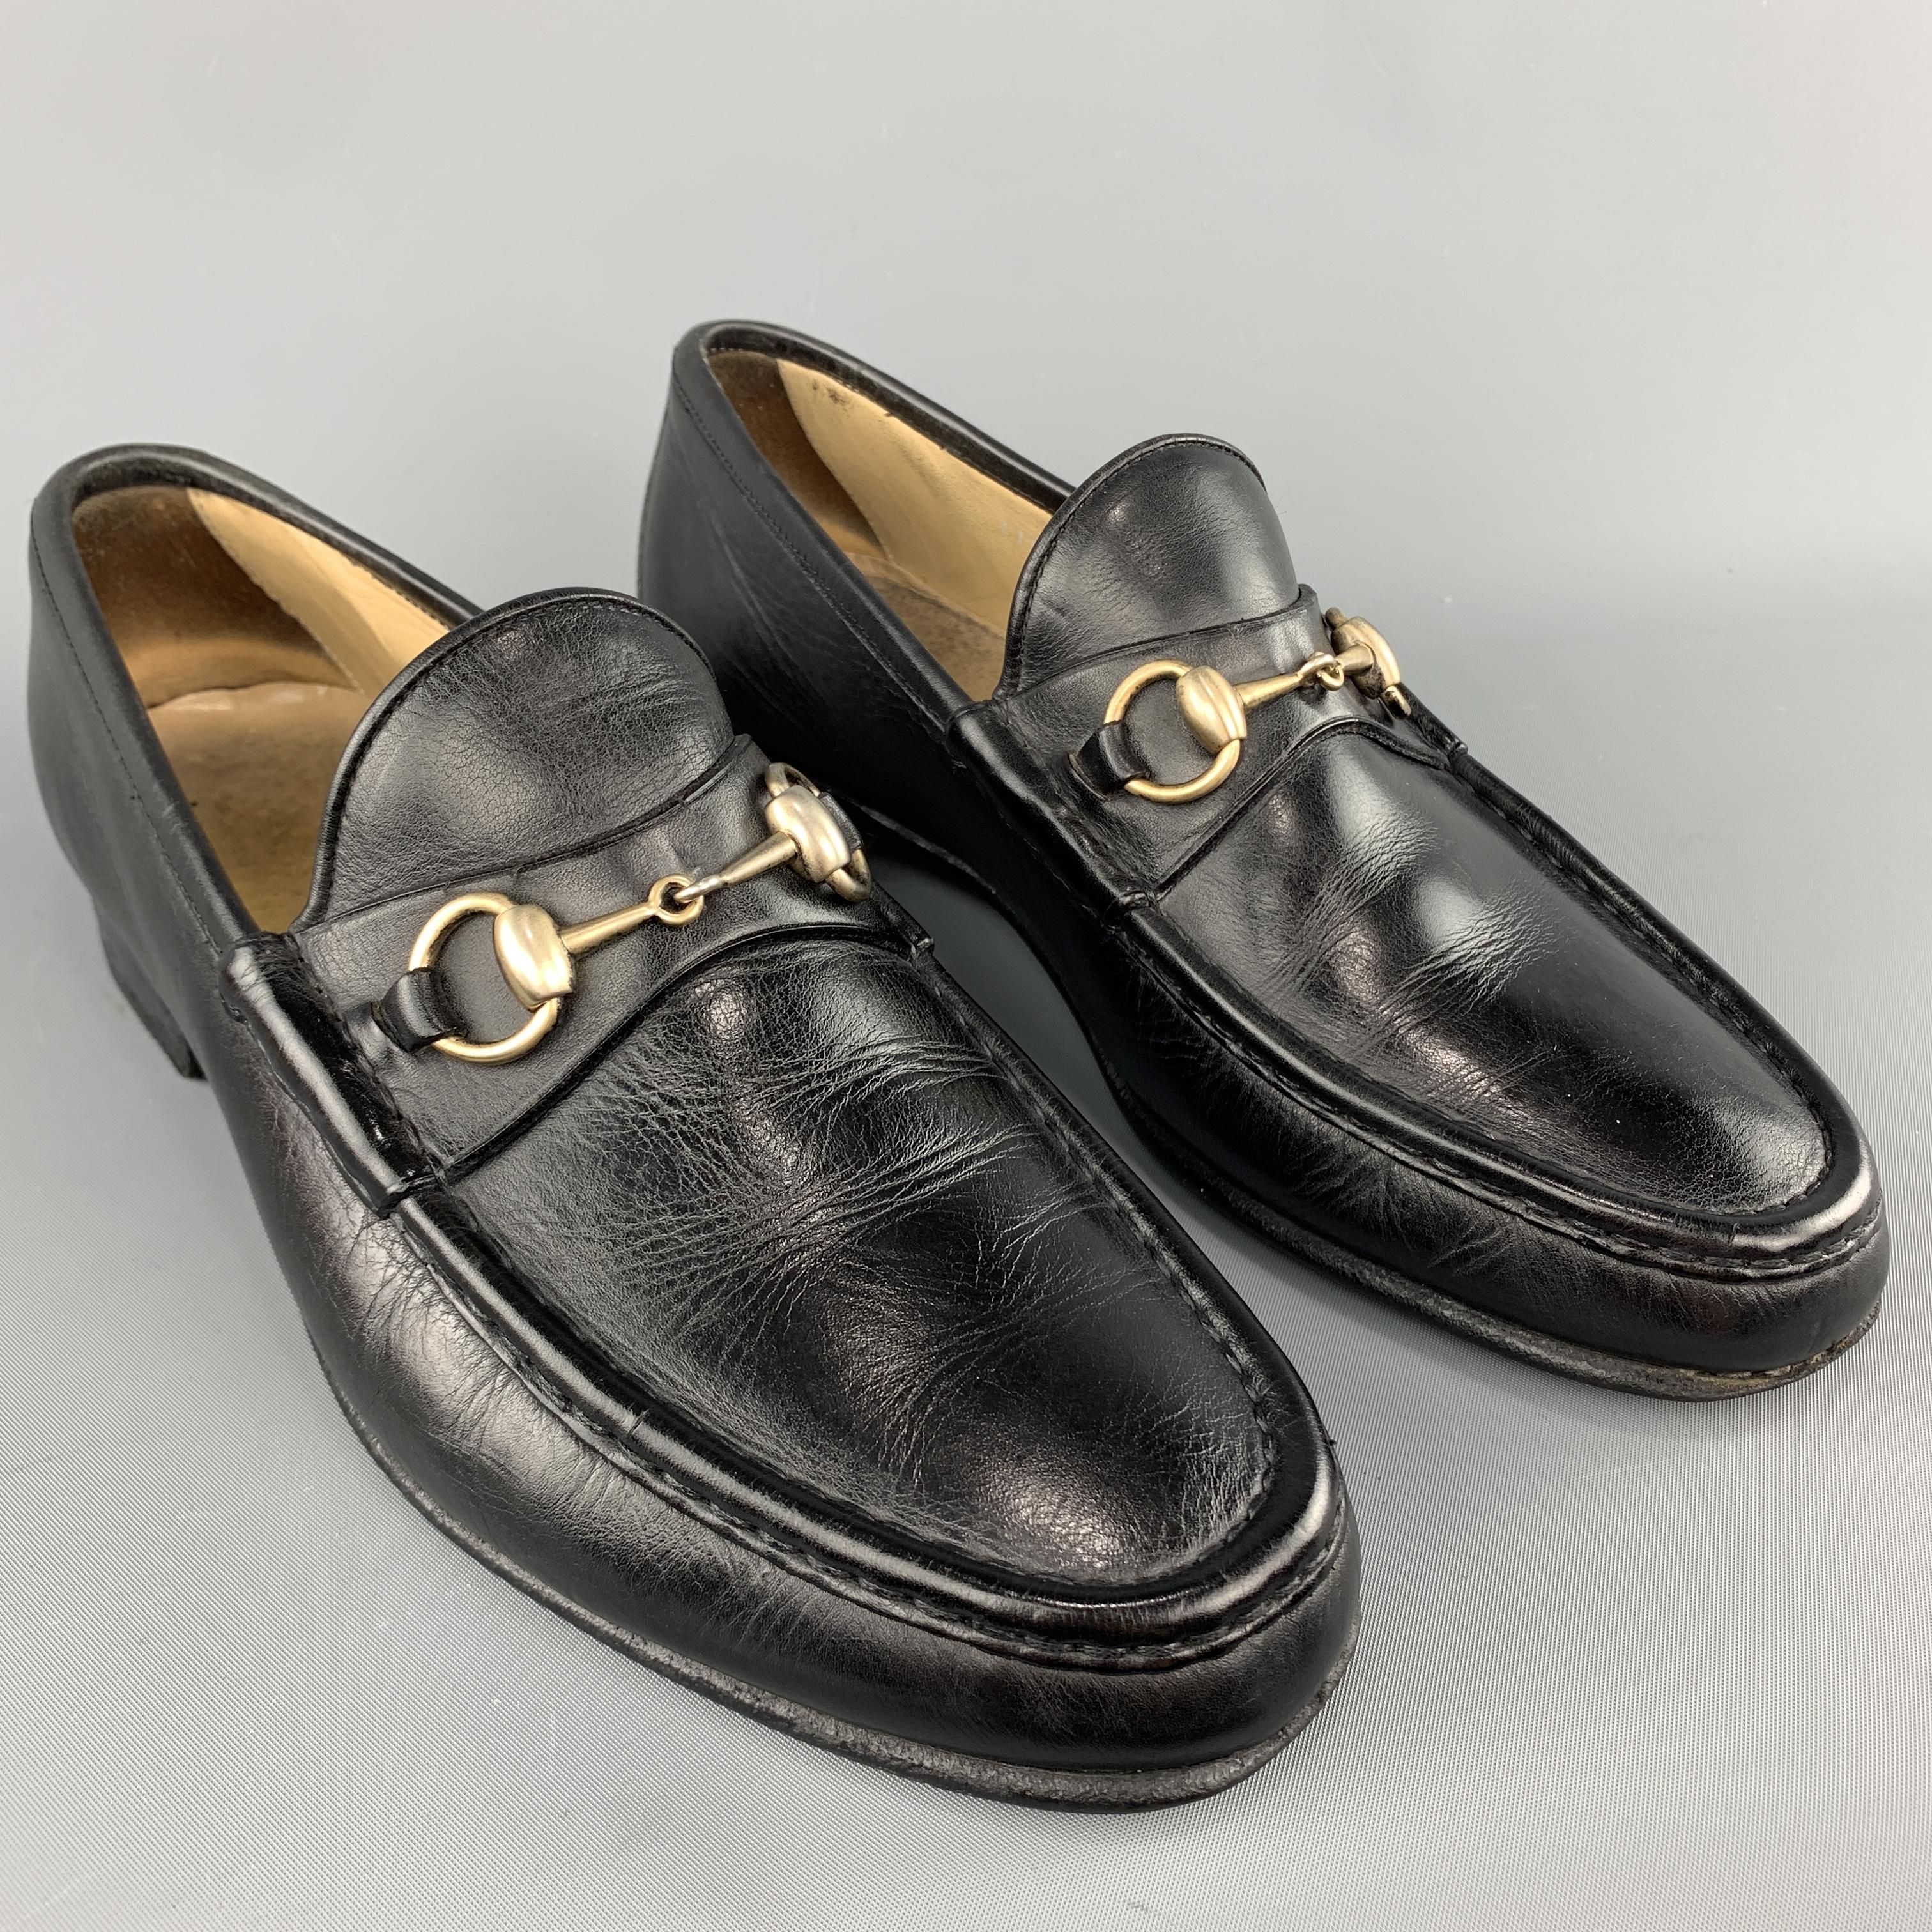 Vintage Gucci Loafers - 3 For Sale on 1stDibs